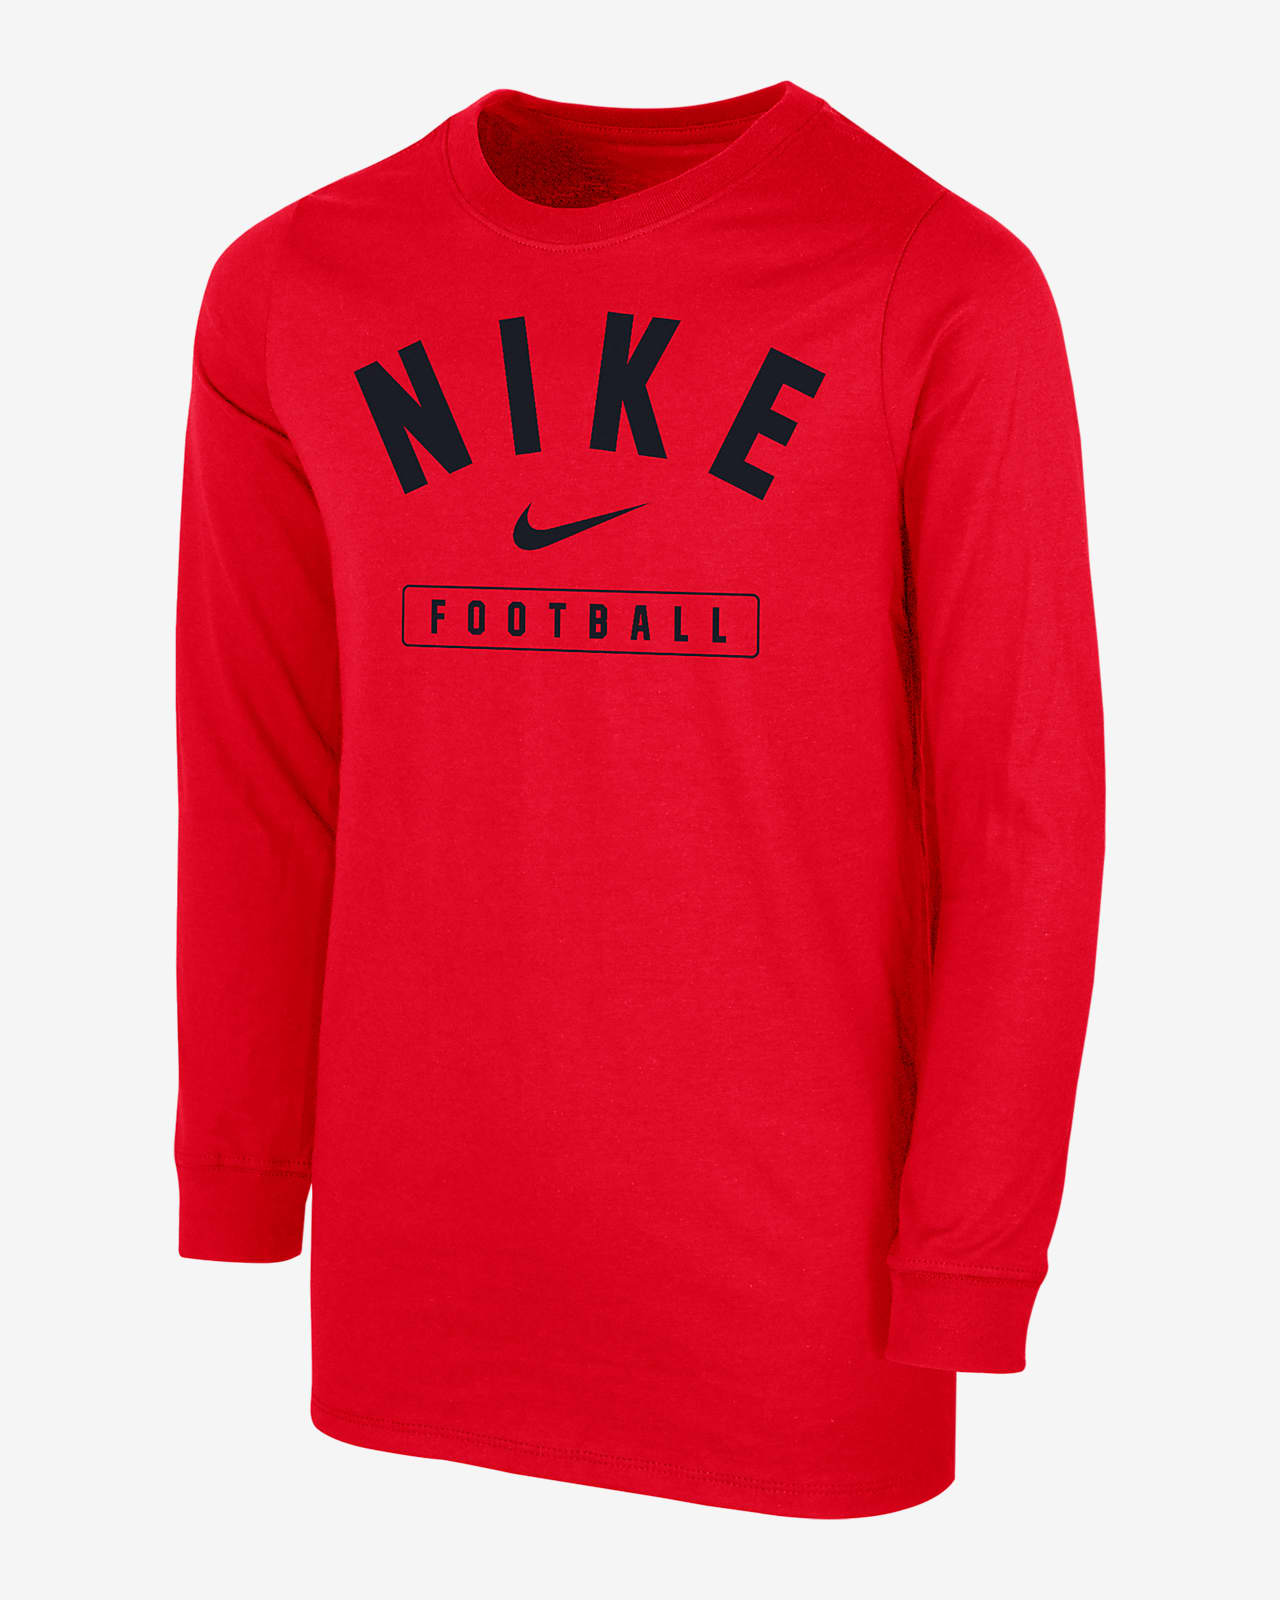 Nike Football Big Kids' (Boys') Long-Sleeve T-Shirt